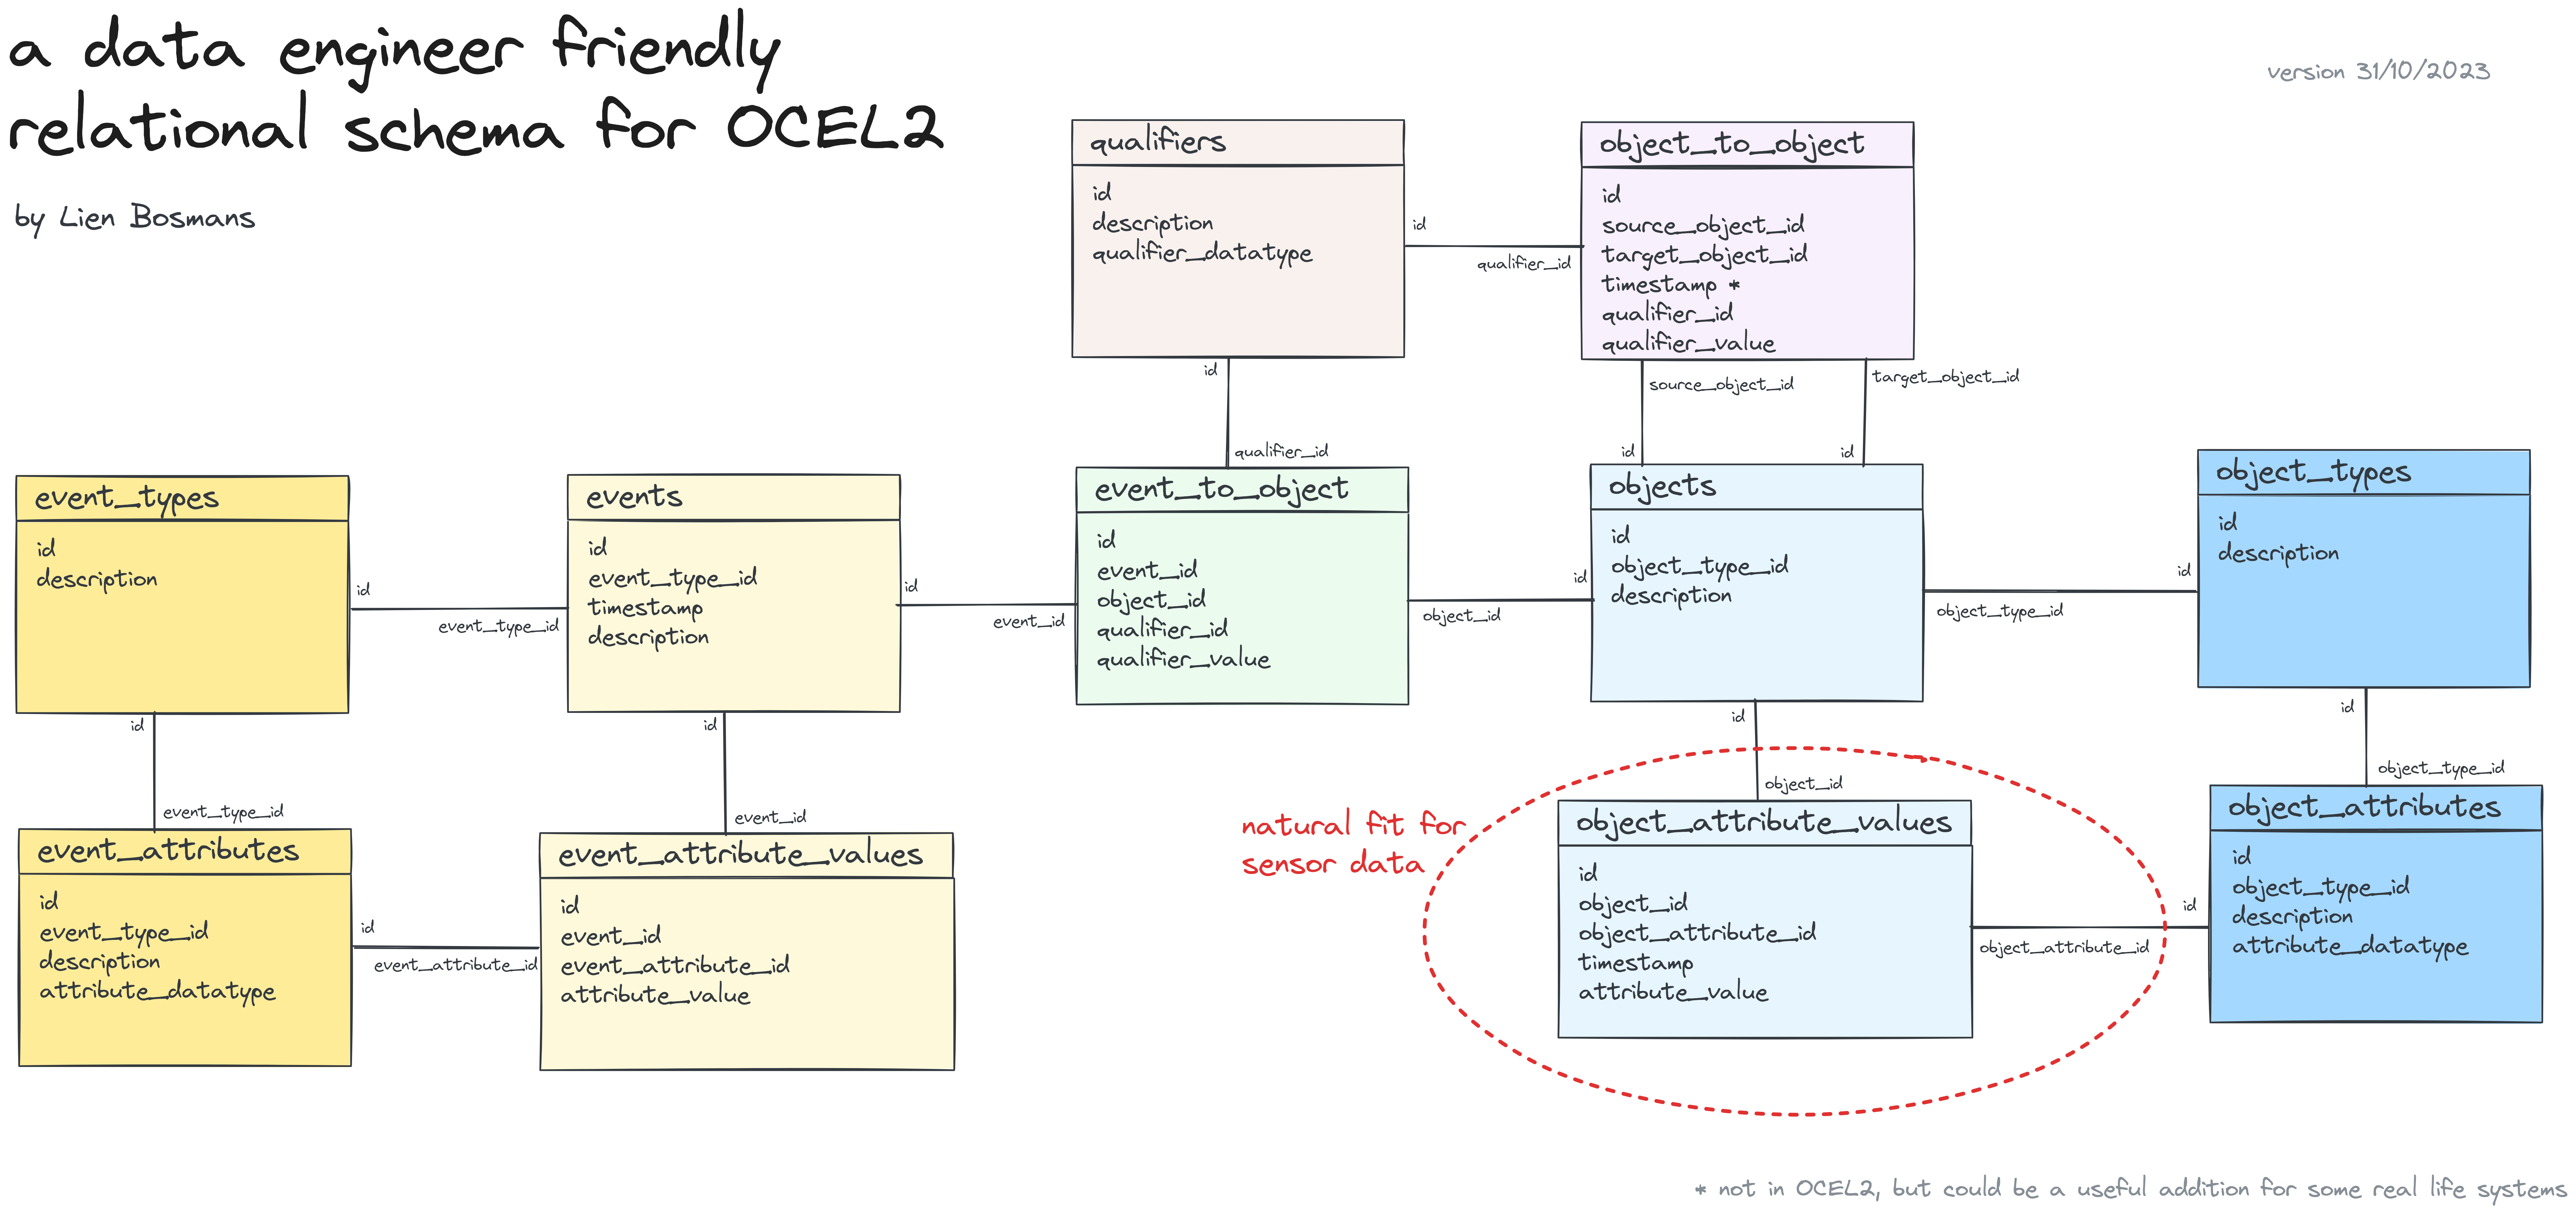 a data engineer friendly relational schema for OCEL2 by Lien Bosmans version 31/10/2023